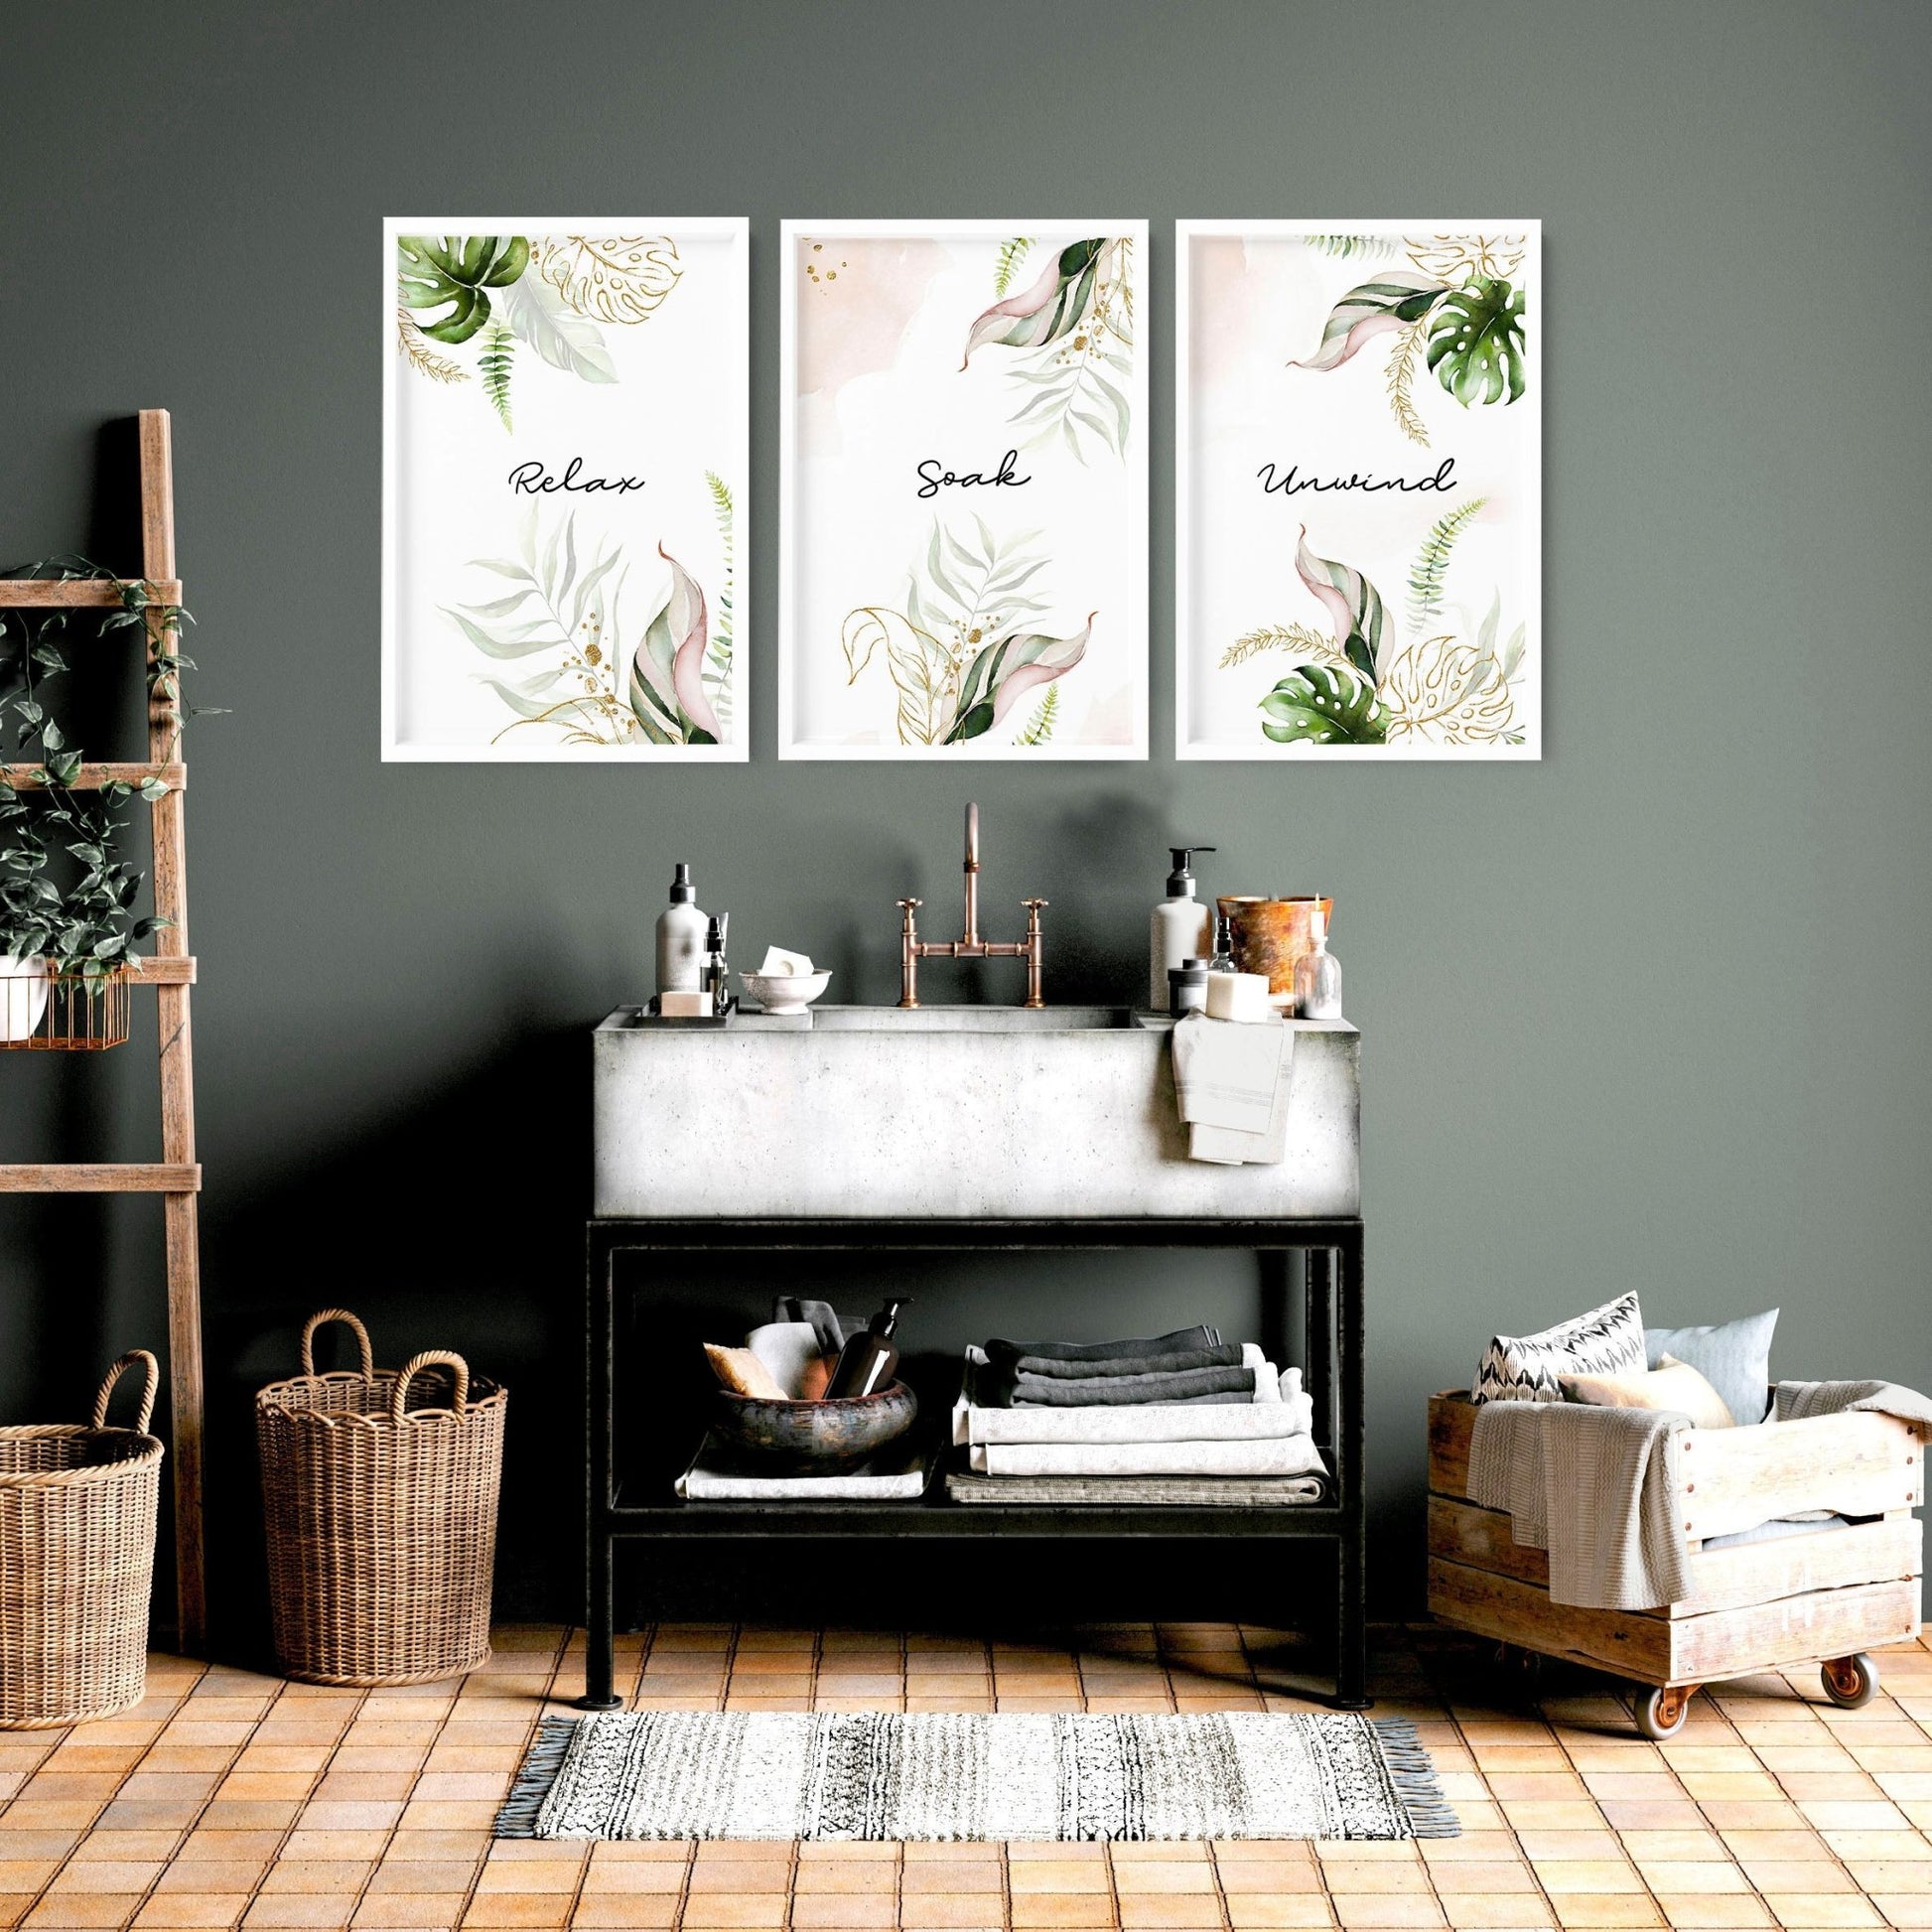 Tropical bathroom art prints | Set of 3 wall art prints - About Wall Art